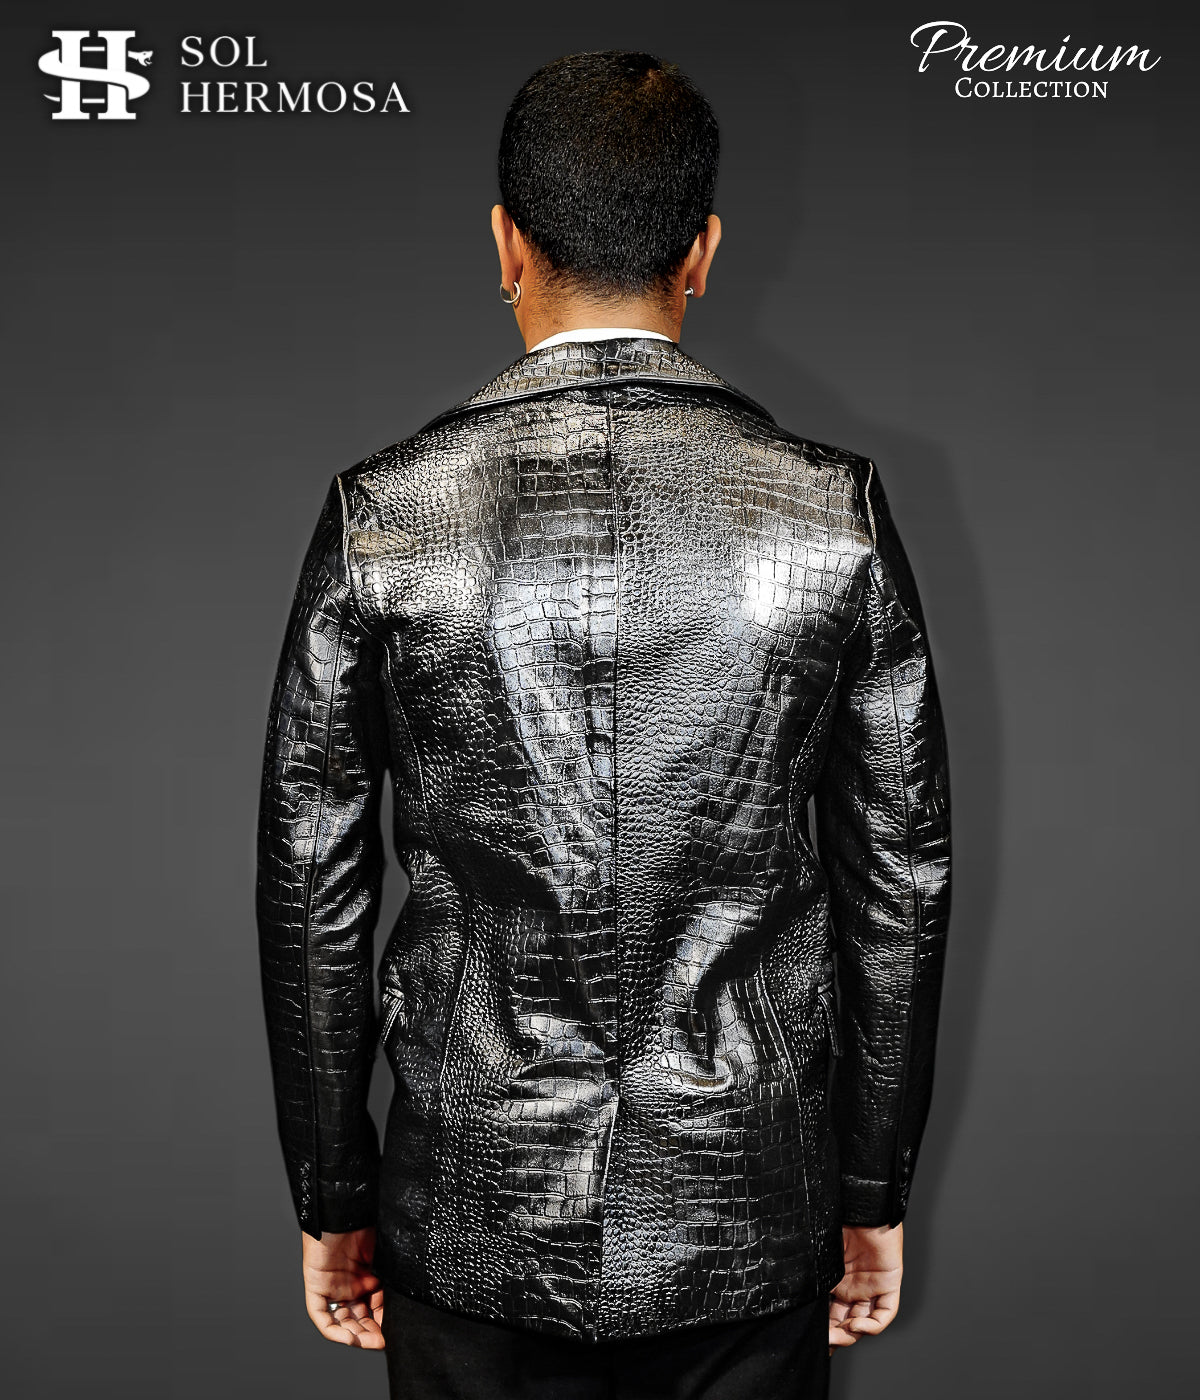 Real Leather Blazer For Men - Fernandez